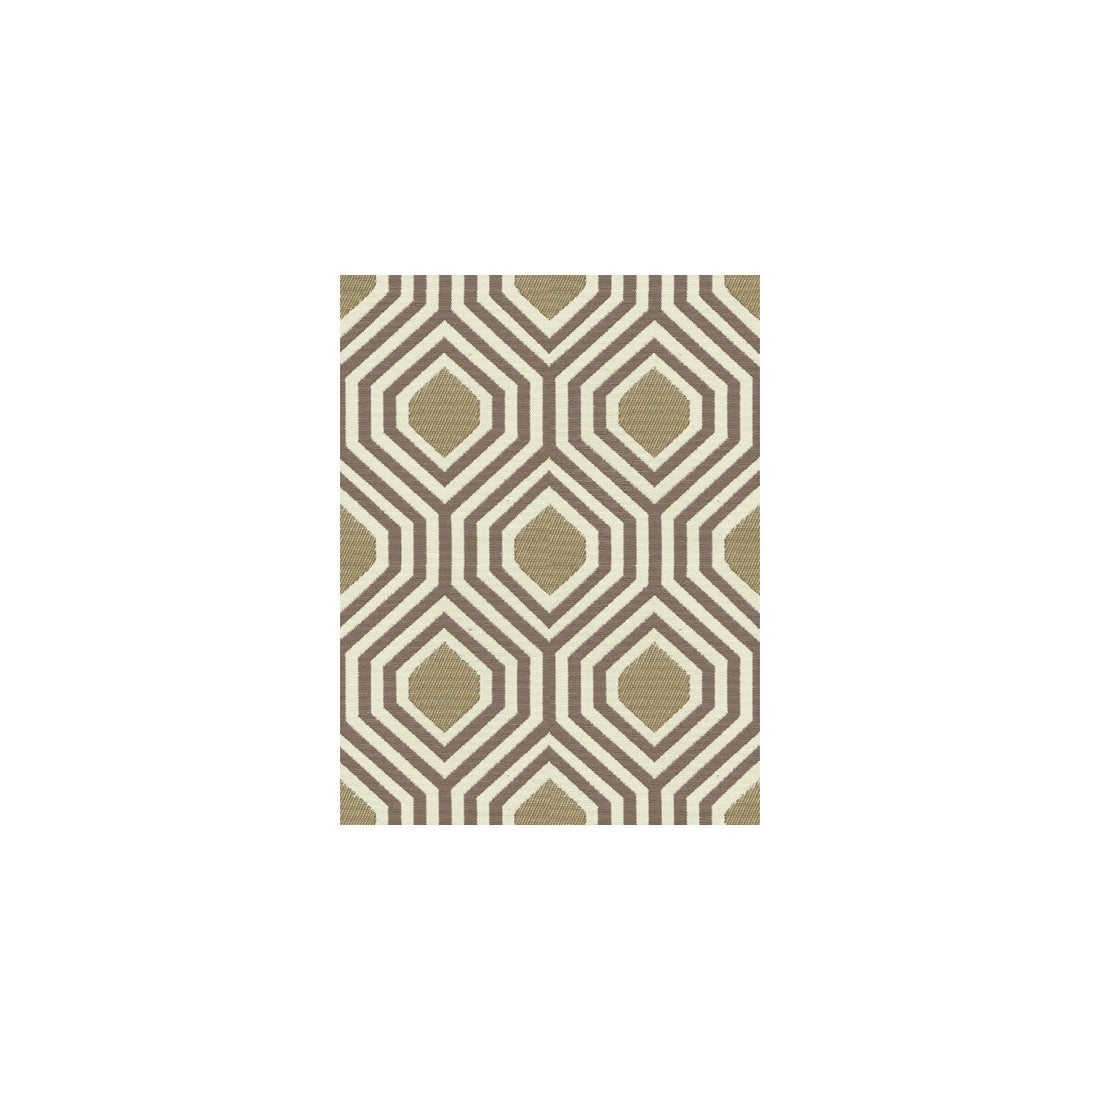 Galvani fabric in sesame color - pattern 31496.416.0 - by Kravet Design